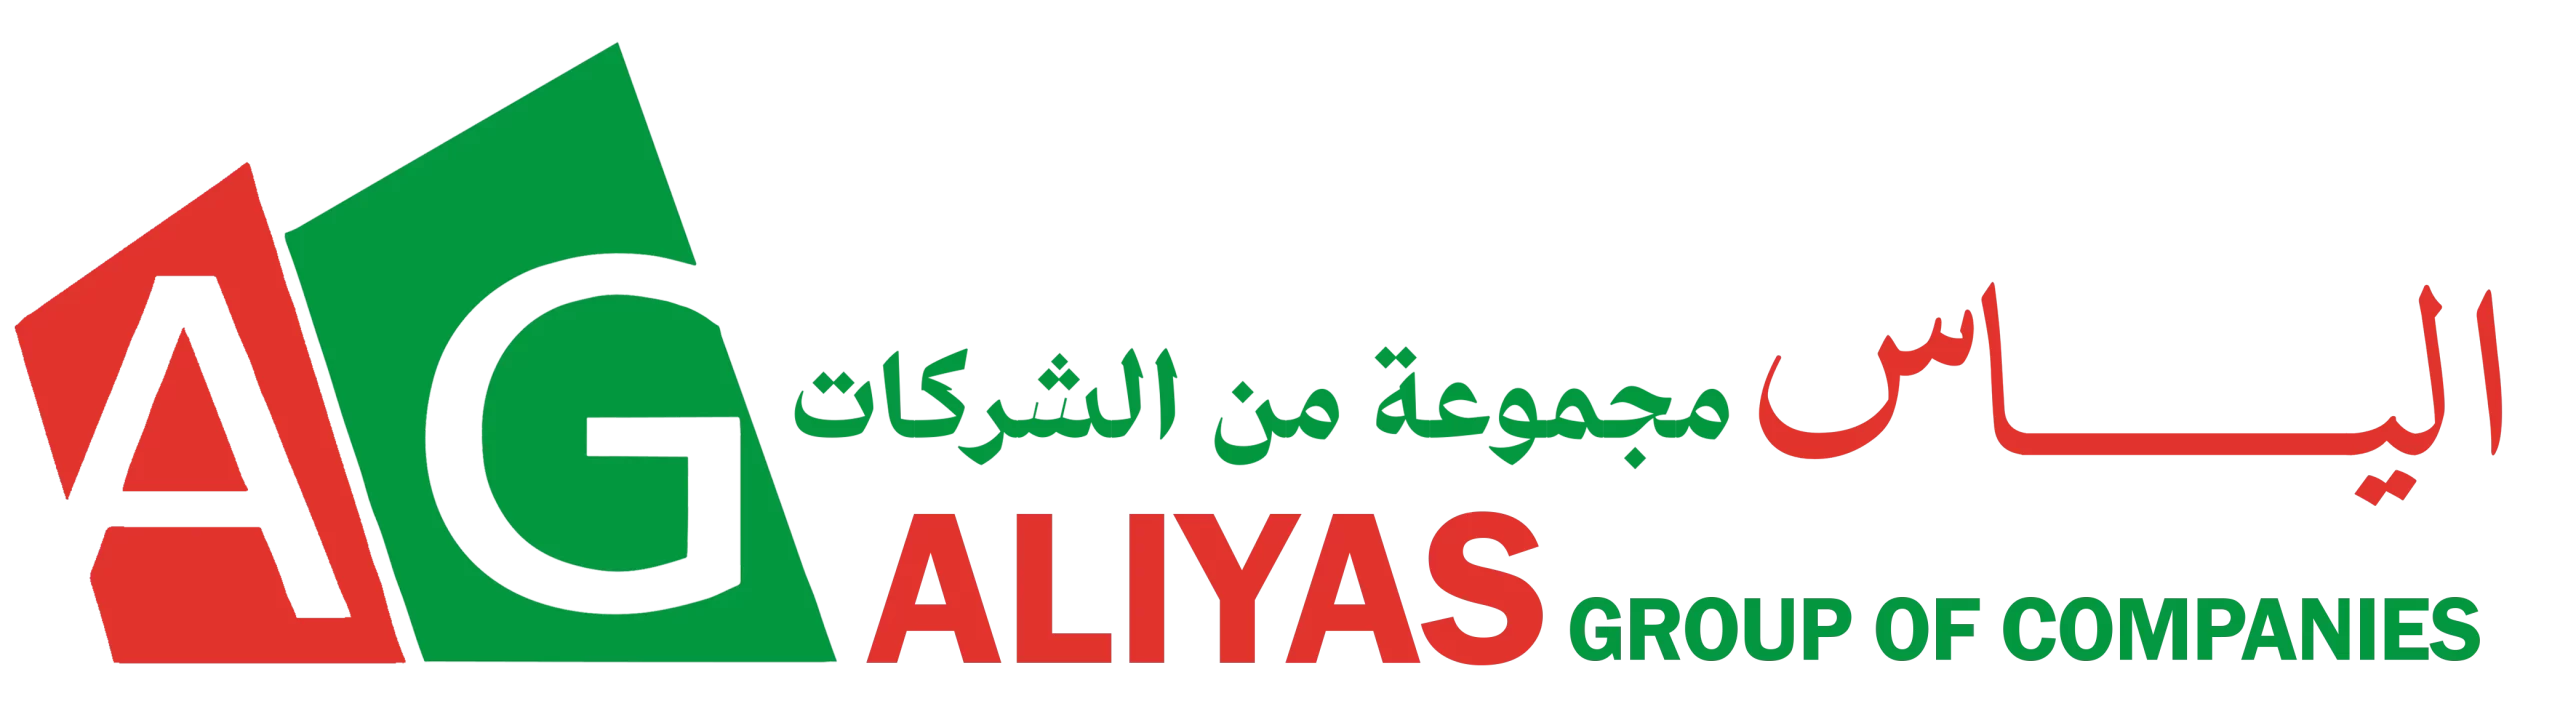 Aliyas Group of Companies